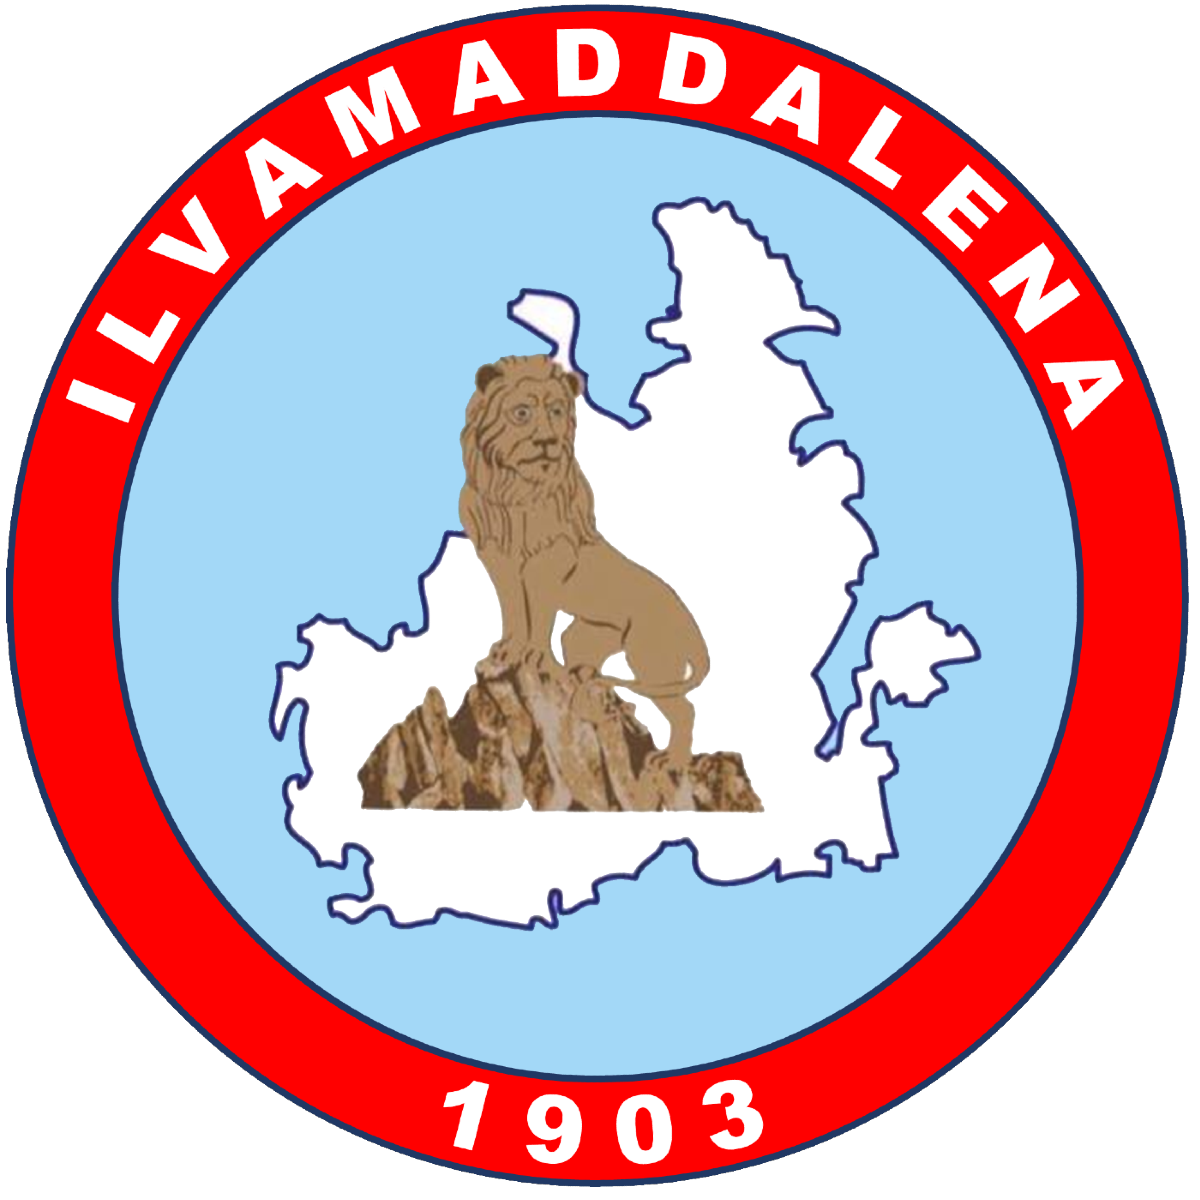 Wappen ASD Ilvamaddalena   40999